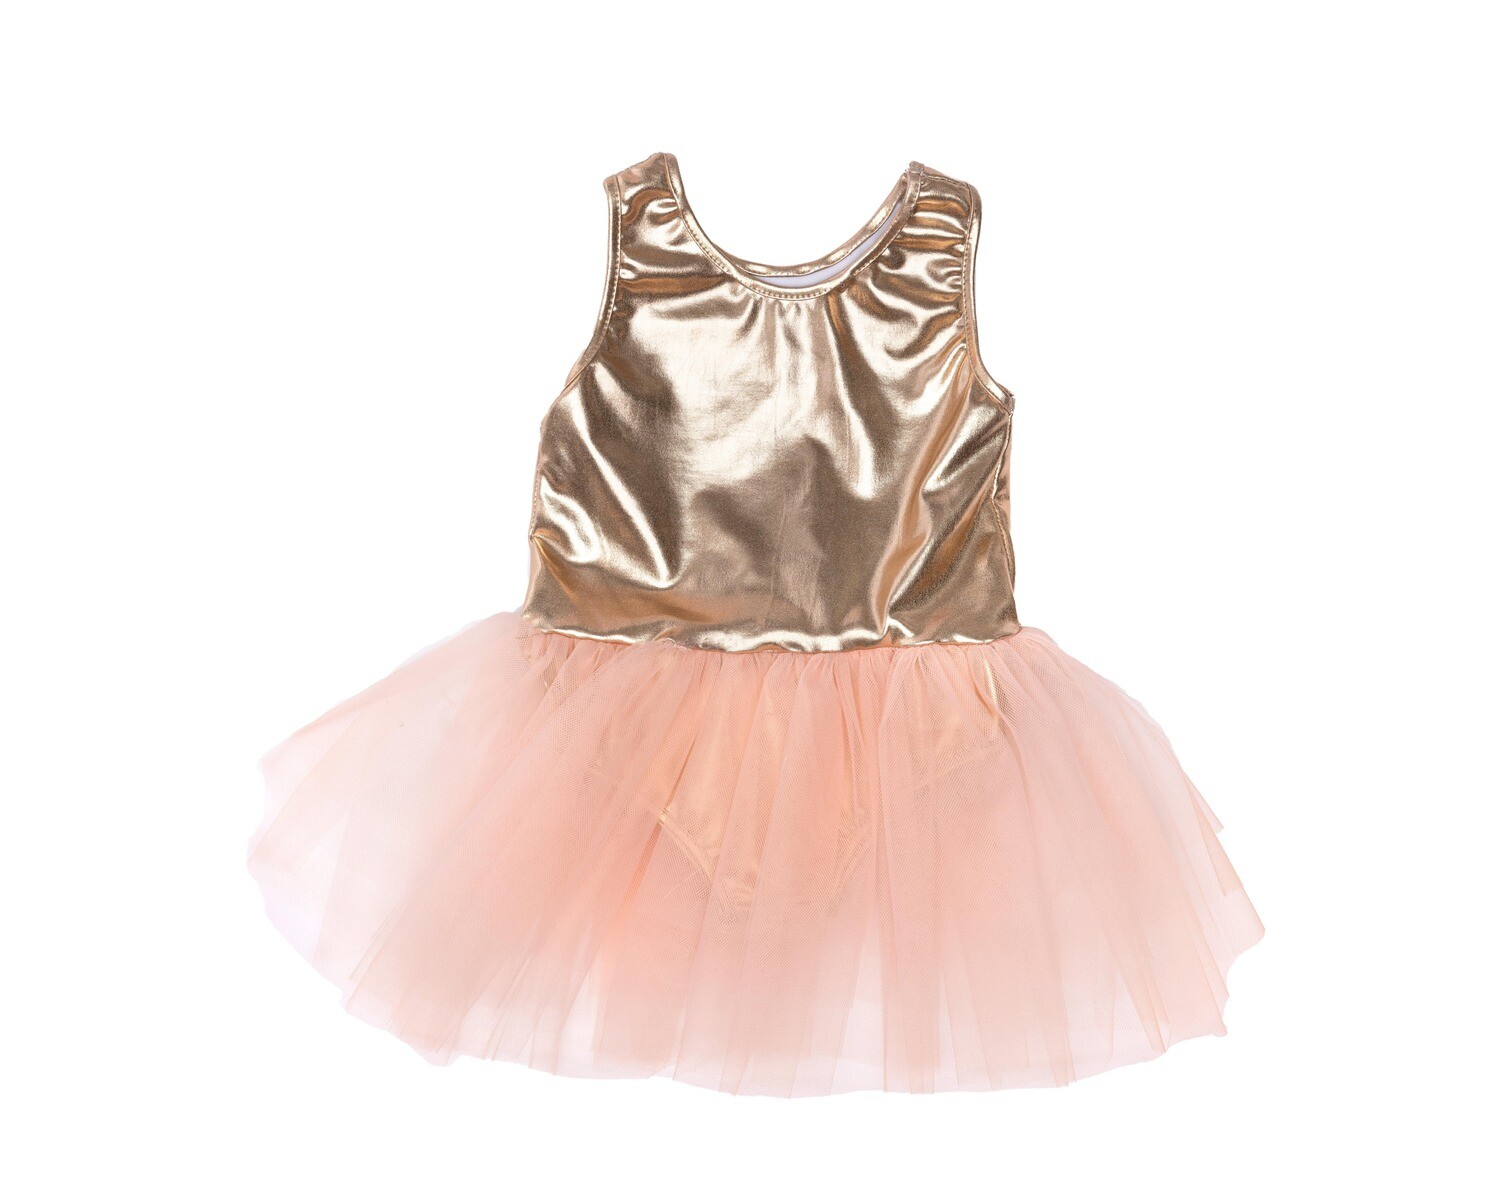 GP Ballet Tutu Dress, Rose Gold, Size 5-6